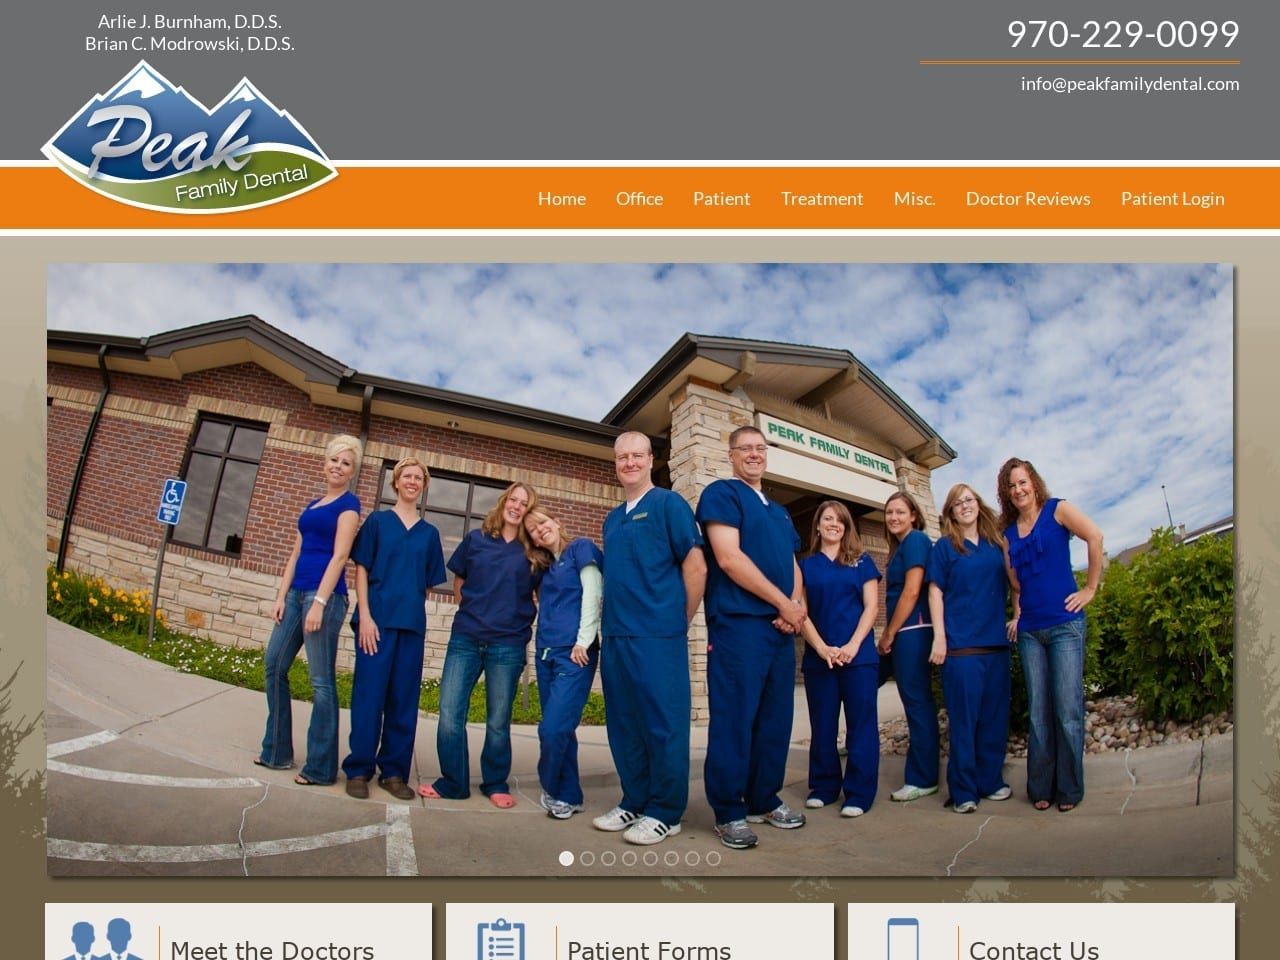 Peak Family Dental Inc Website Screenshot from peakfamilydental.com